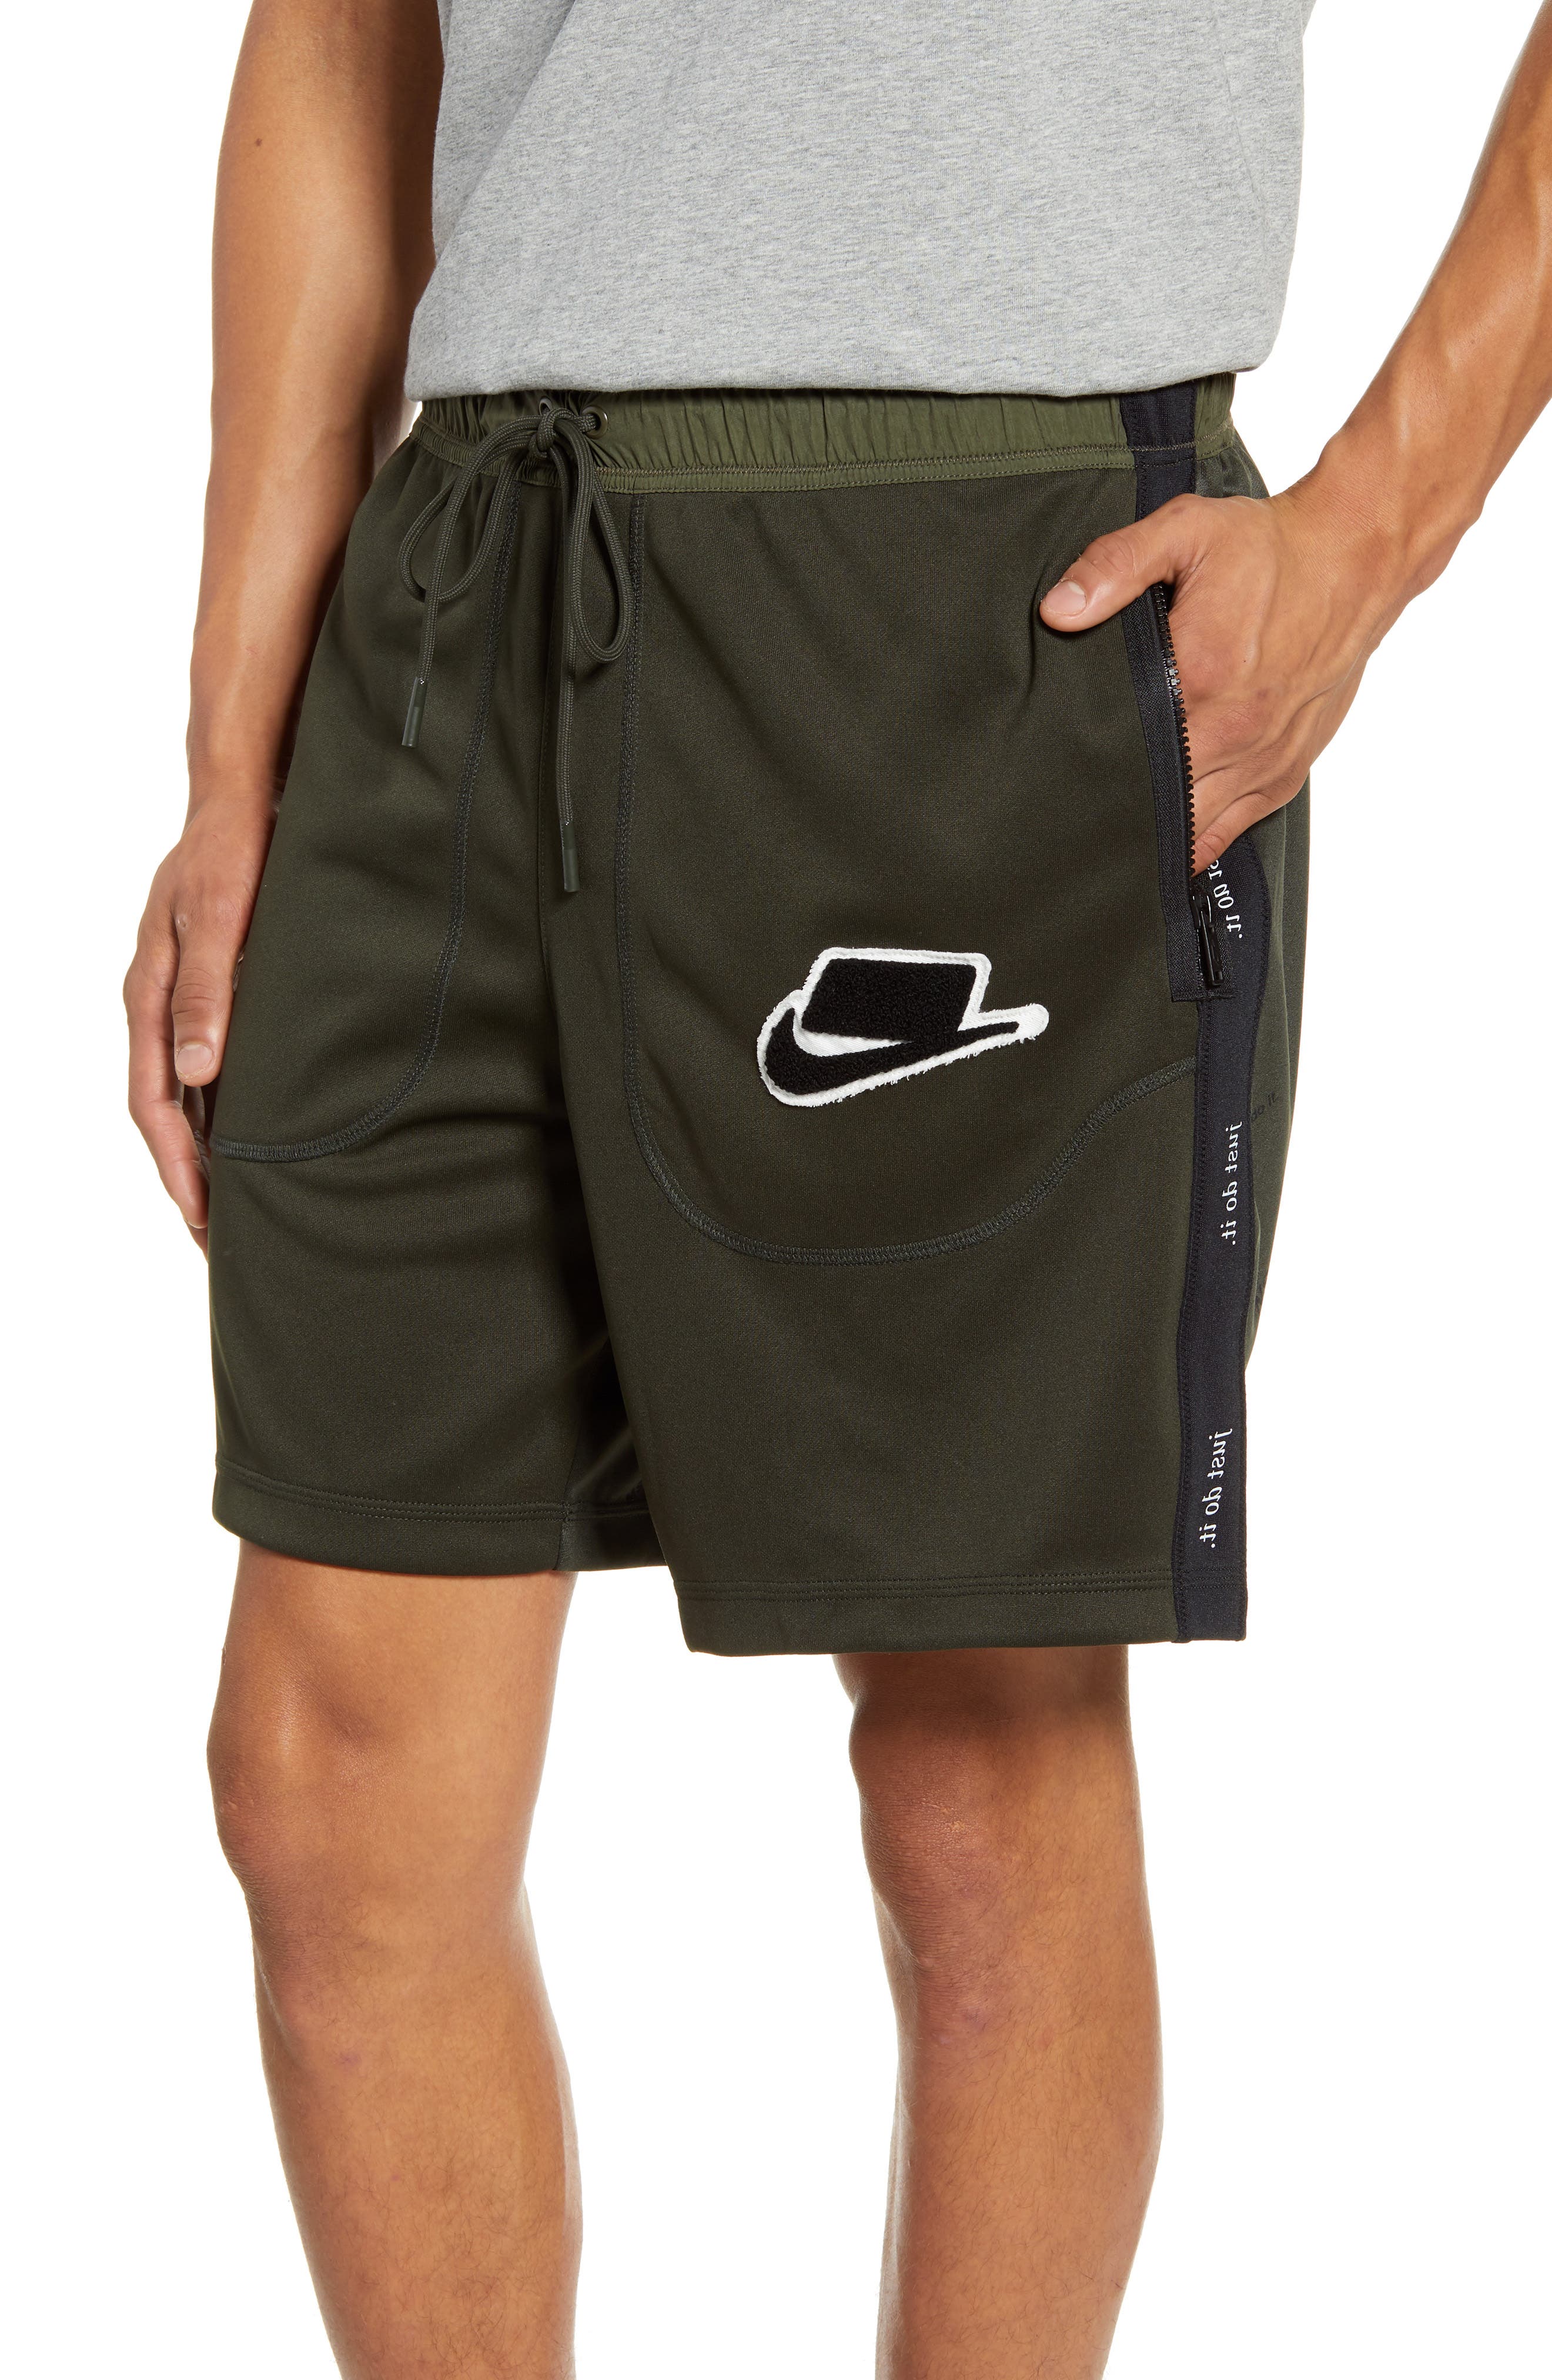 shorts with zipper pockets nike